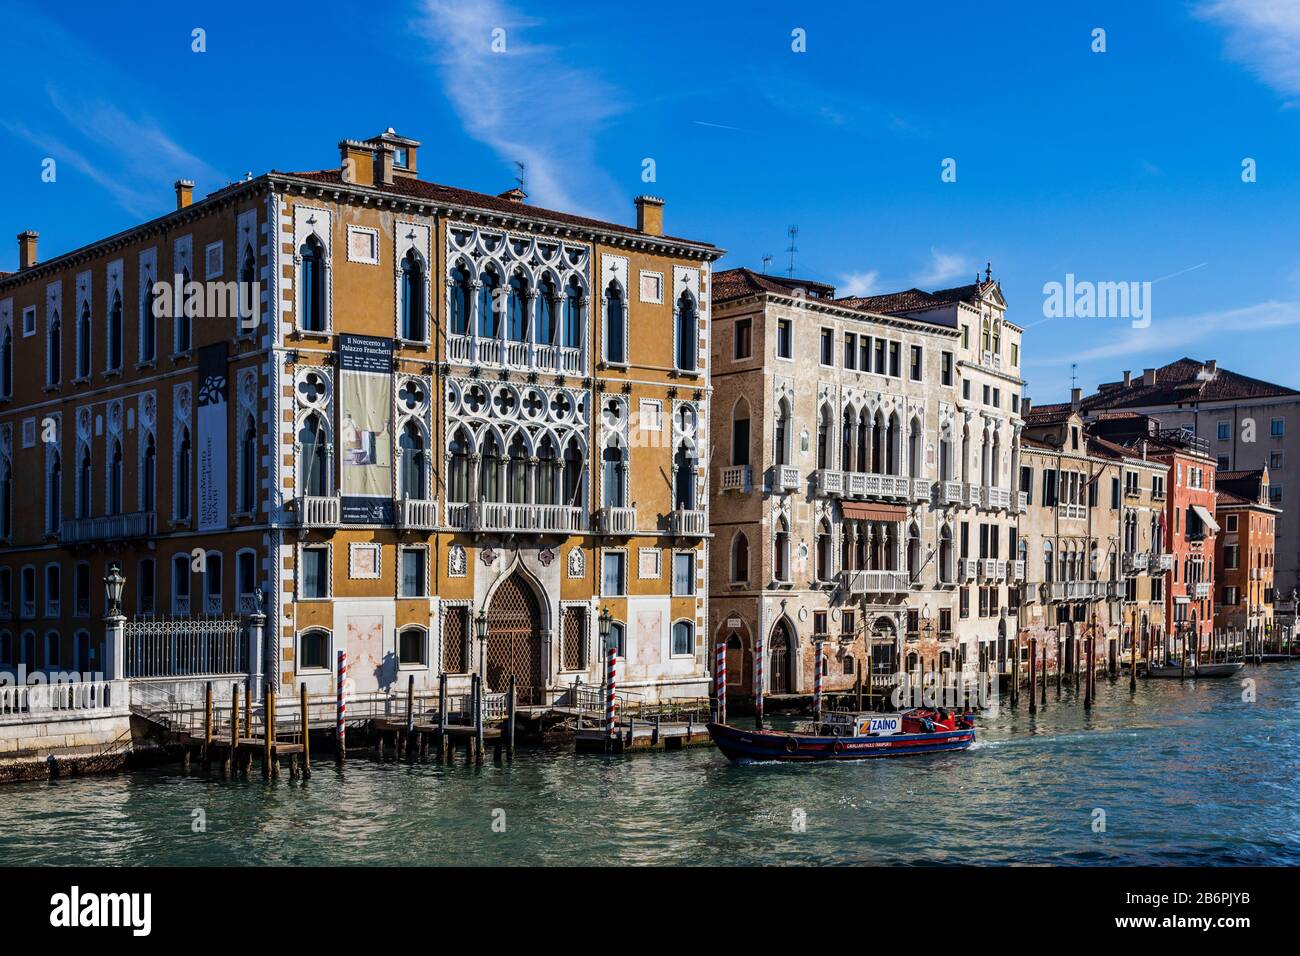 Palazzo Cavalli-Franchetti and Palazzo Barbaro on the Grand Canal, Canal Grande, Venice, Italy, Europe Stock Photo